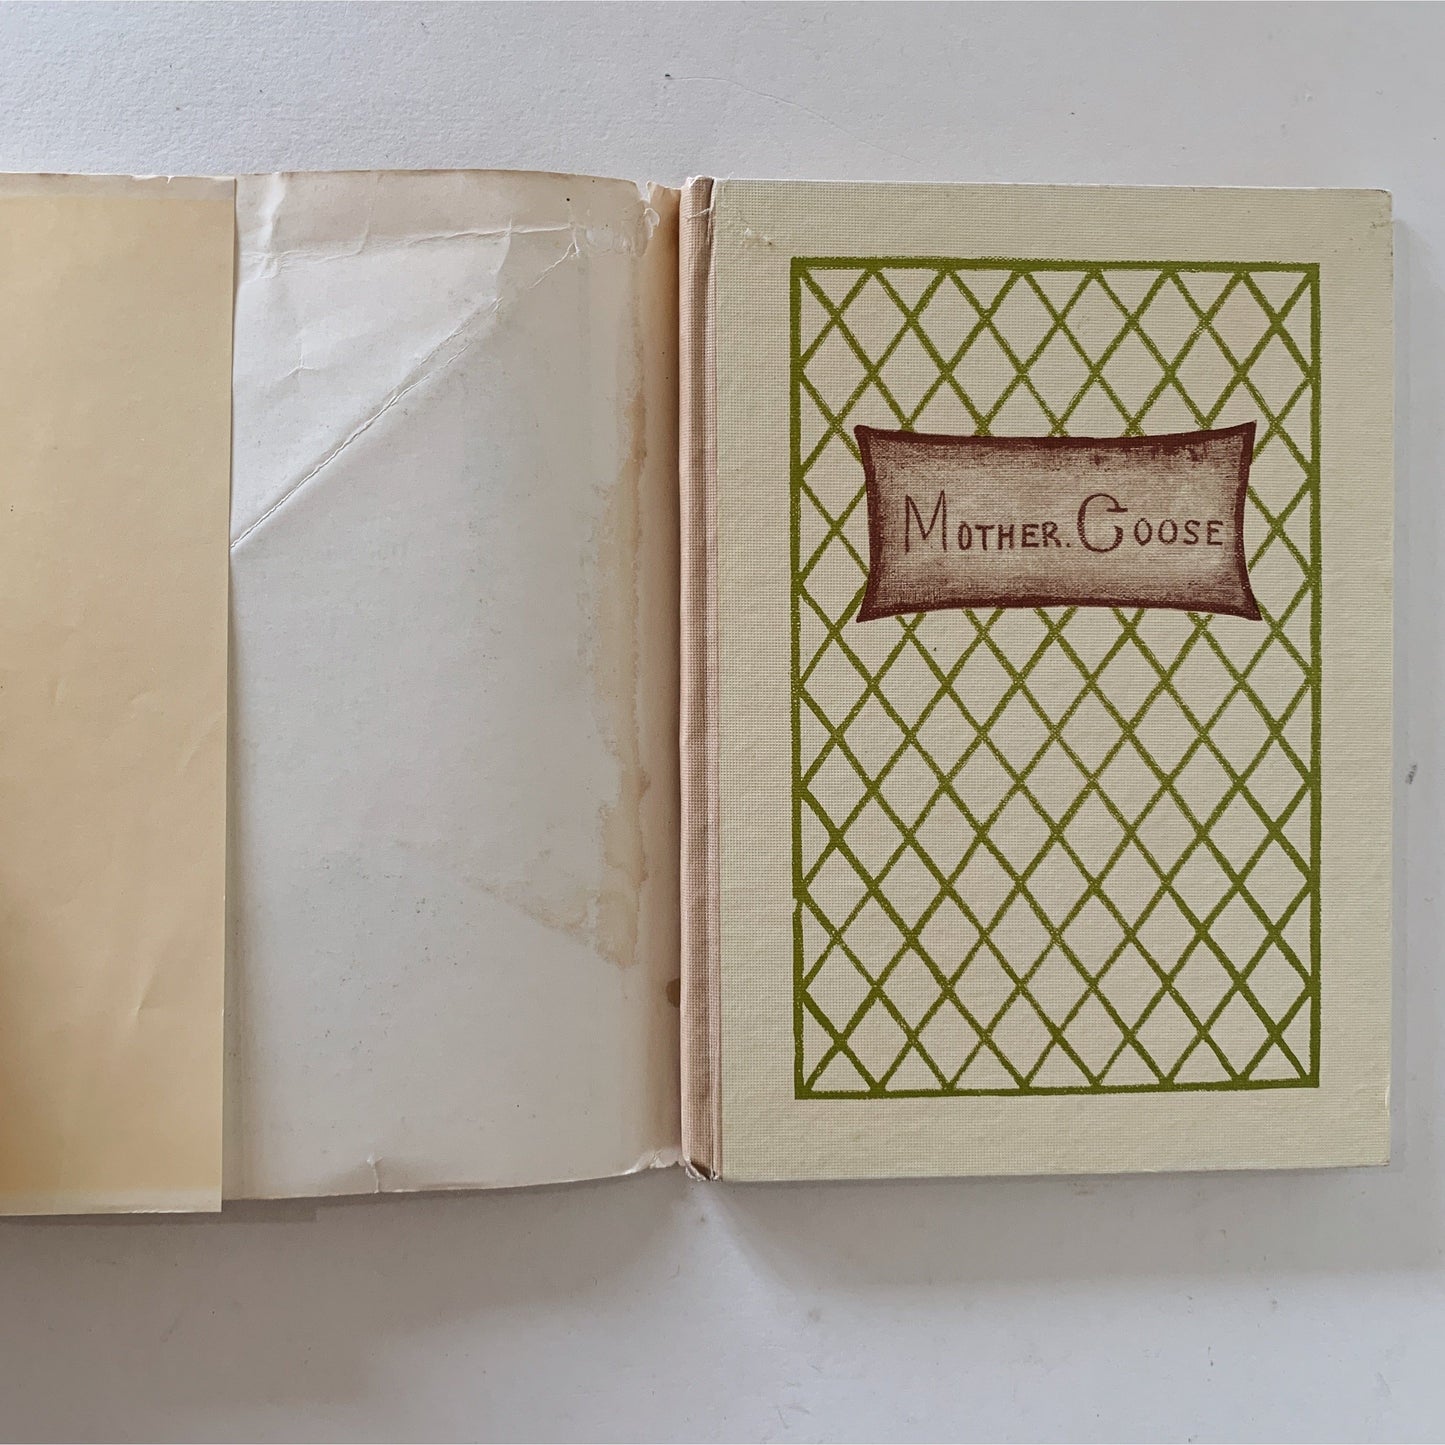 Mother Goose, Kate Greenaway, Hardcover Children's Book